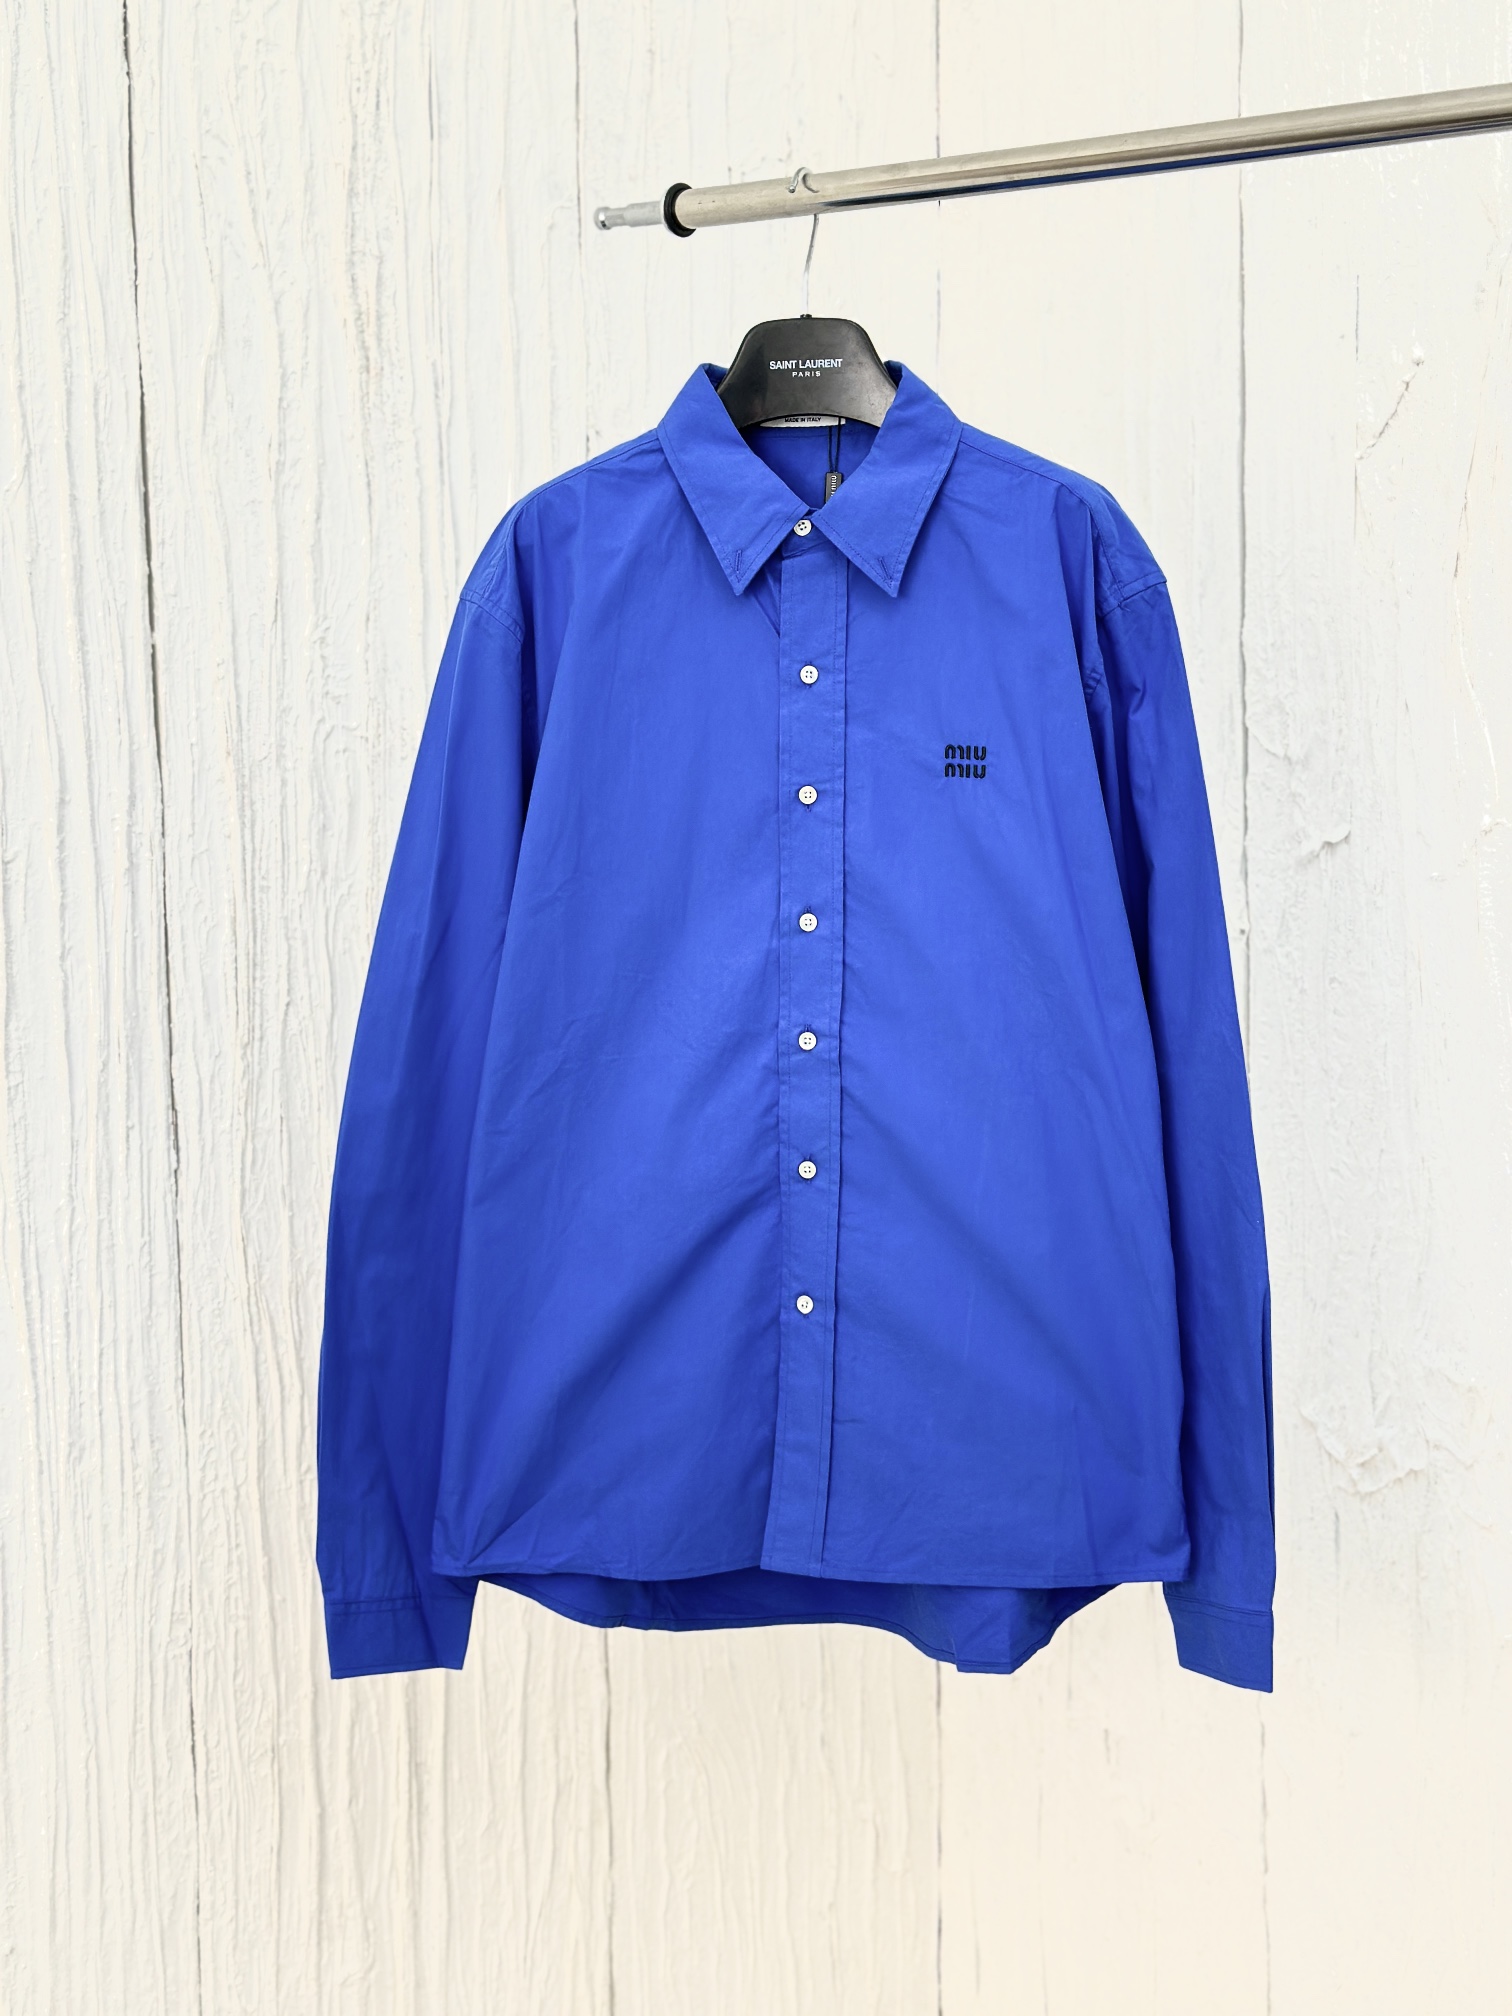 MiuMiu Clothing Shirts & Blouses Blue